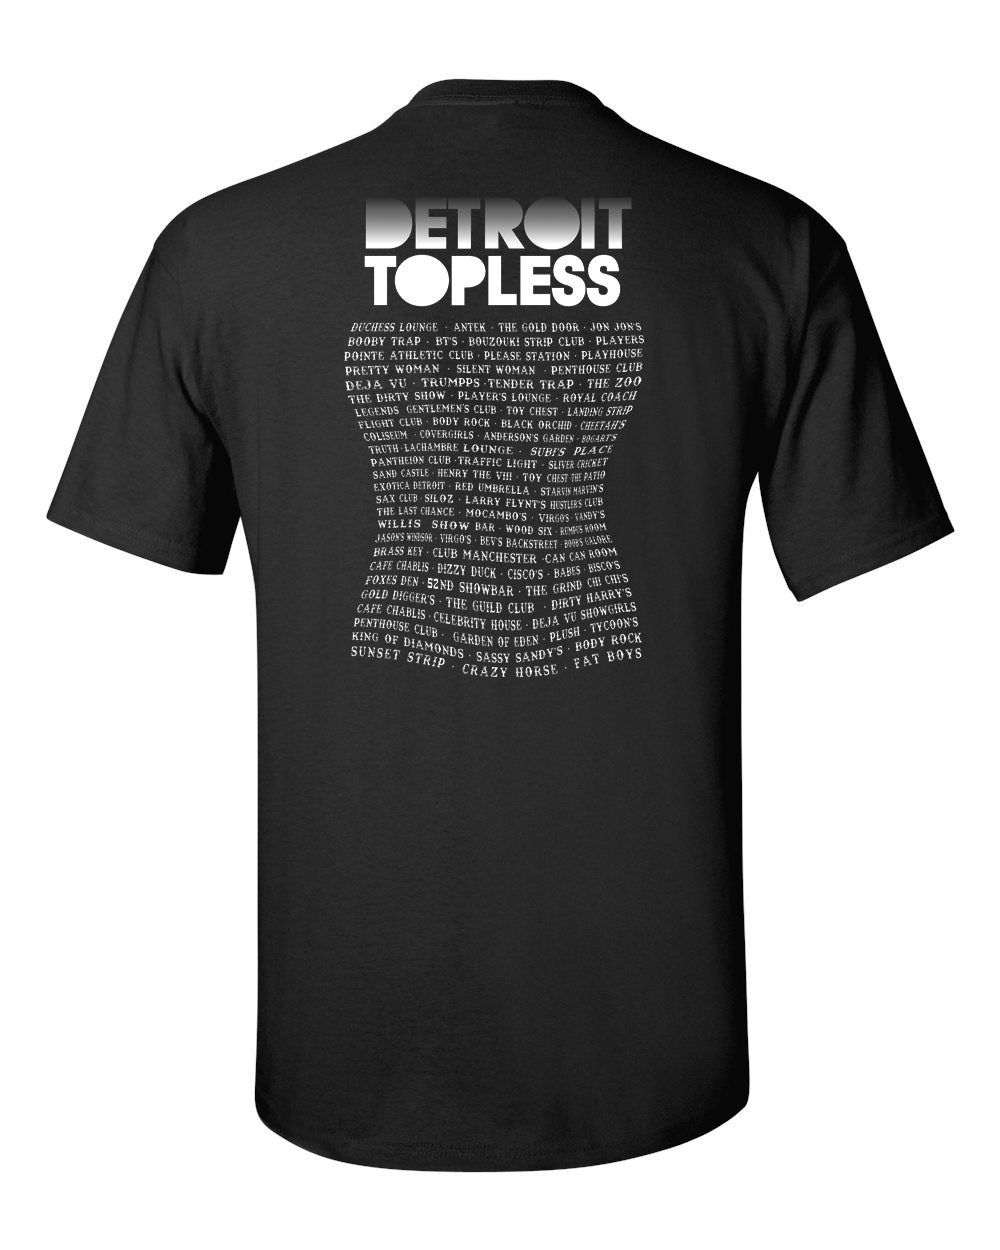 detroit topless  retro t-shirt